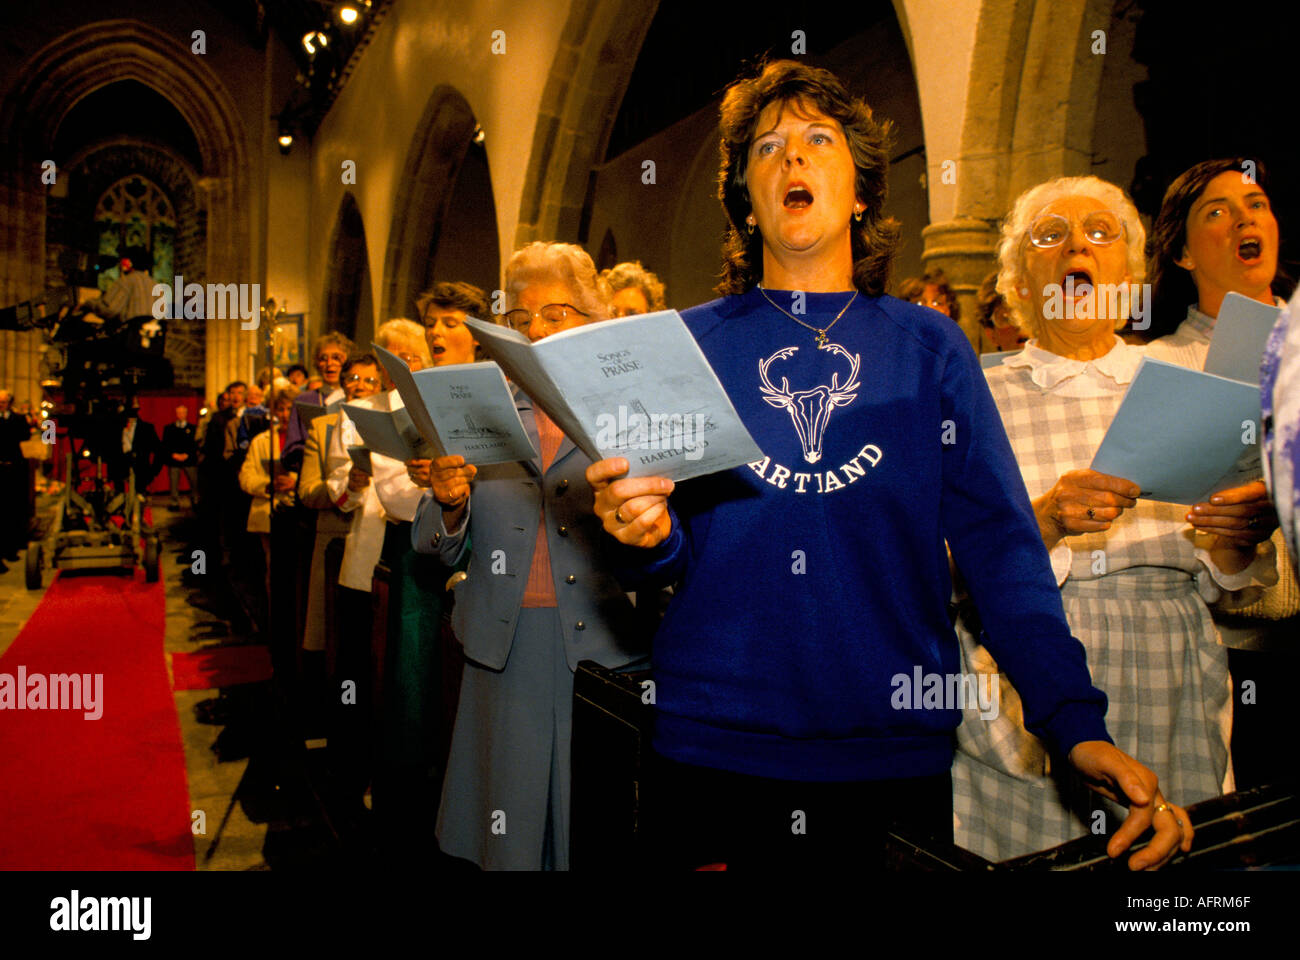 Singing in church of Saint St Nectan at Stoke, Hartland, Devon. Filming, BBC One outside broadcast 'Songs of Praise' UK. HOMER SYKES Stock Photo